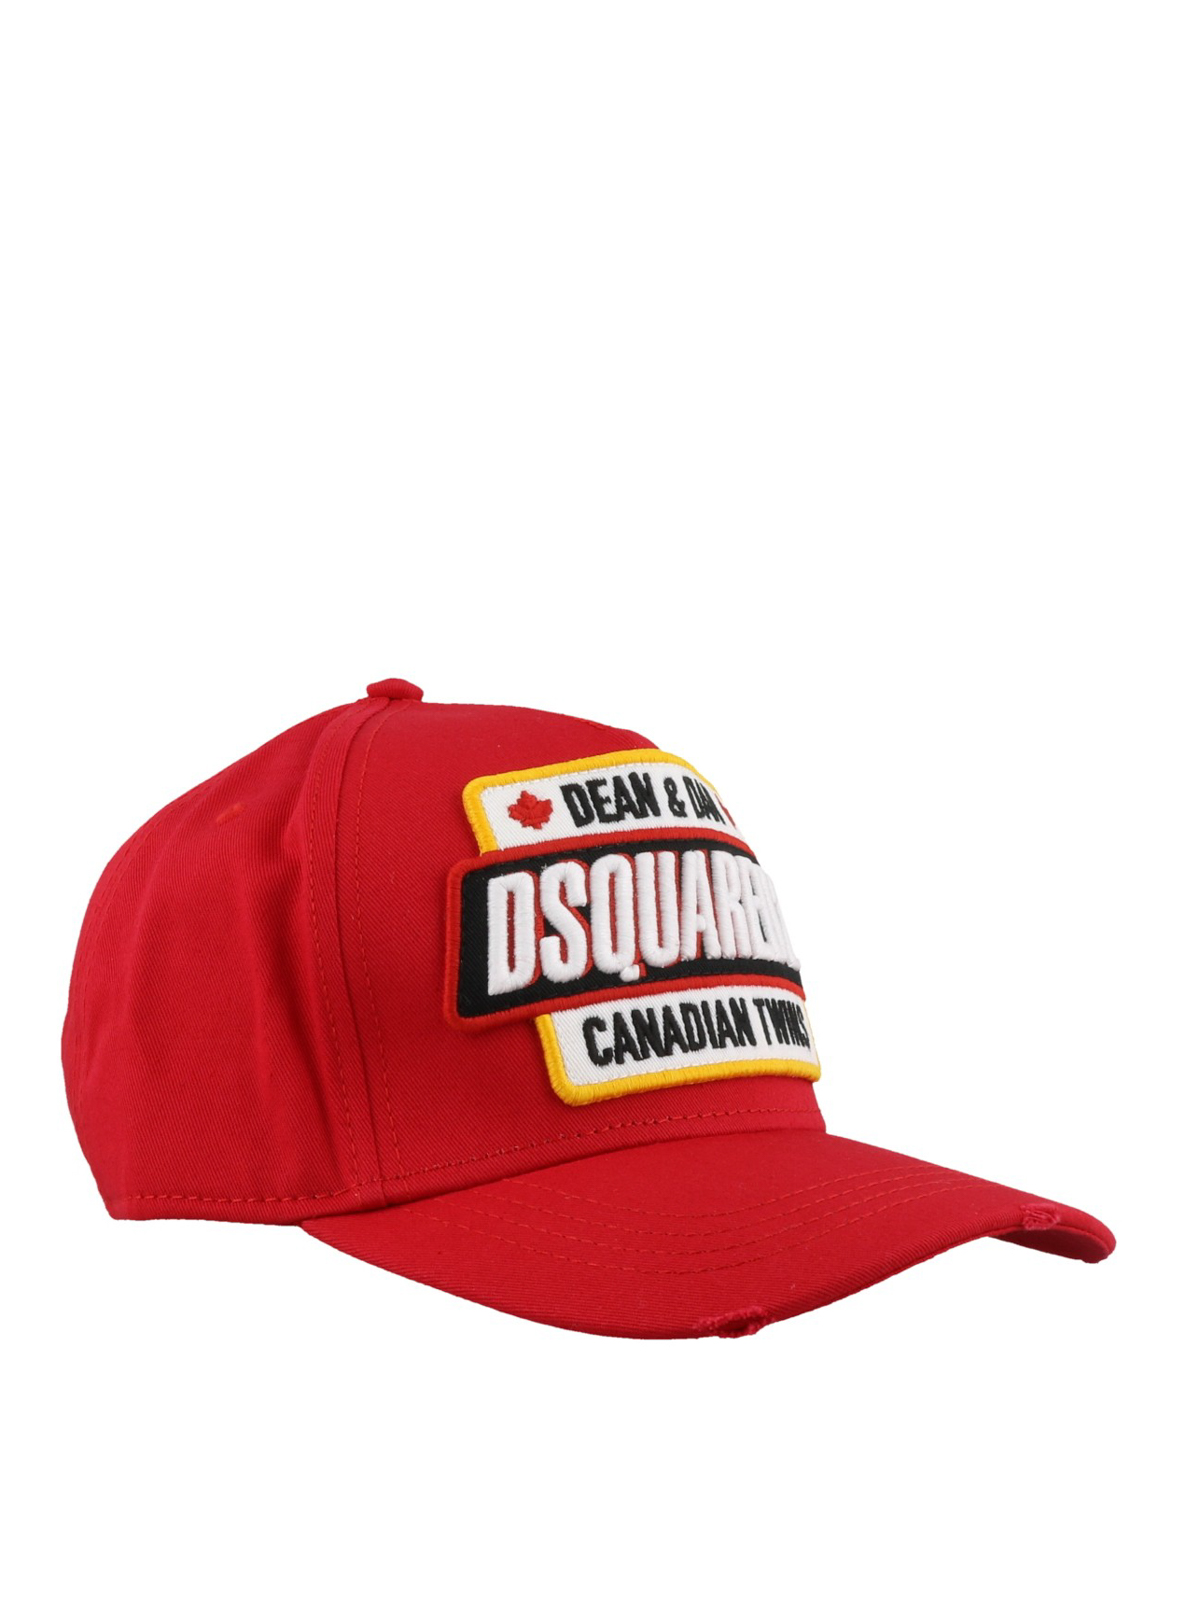 Hats & caps Dsquared2 - Canadian Twins red baseball cap ...